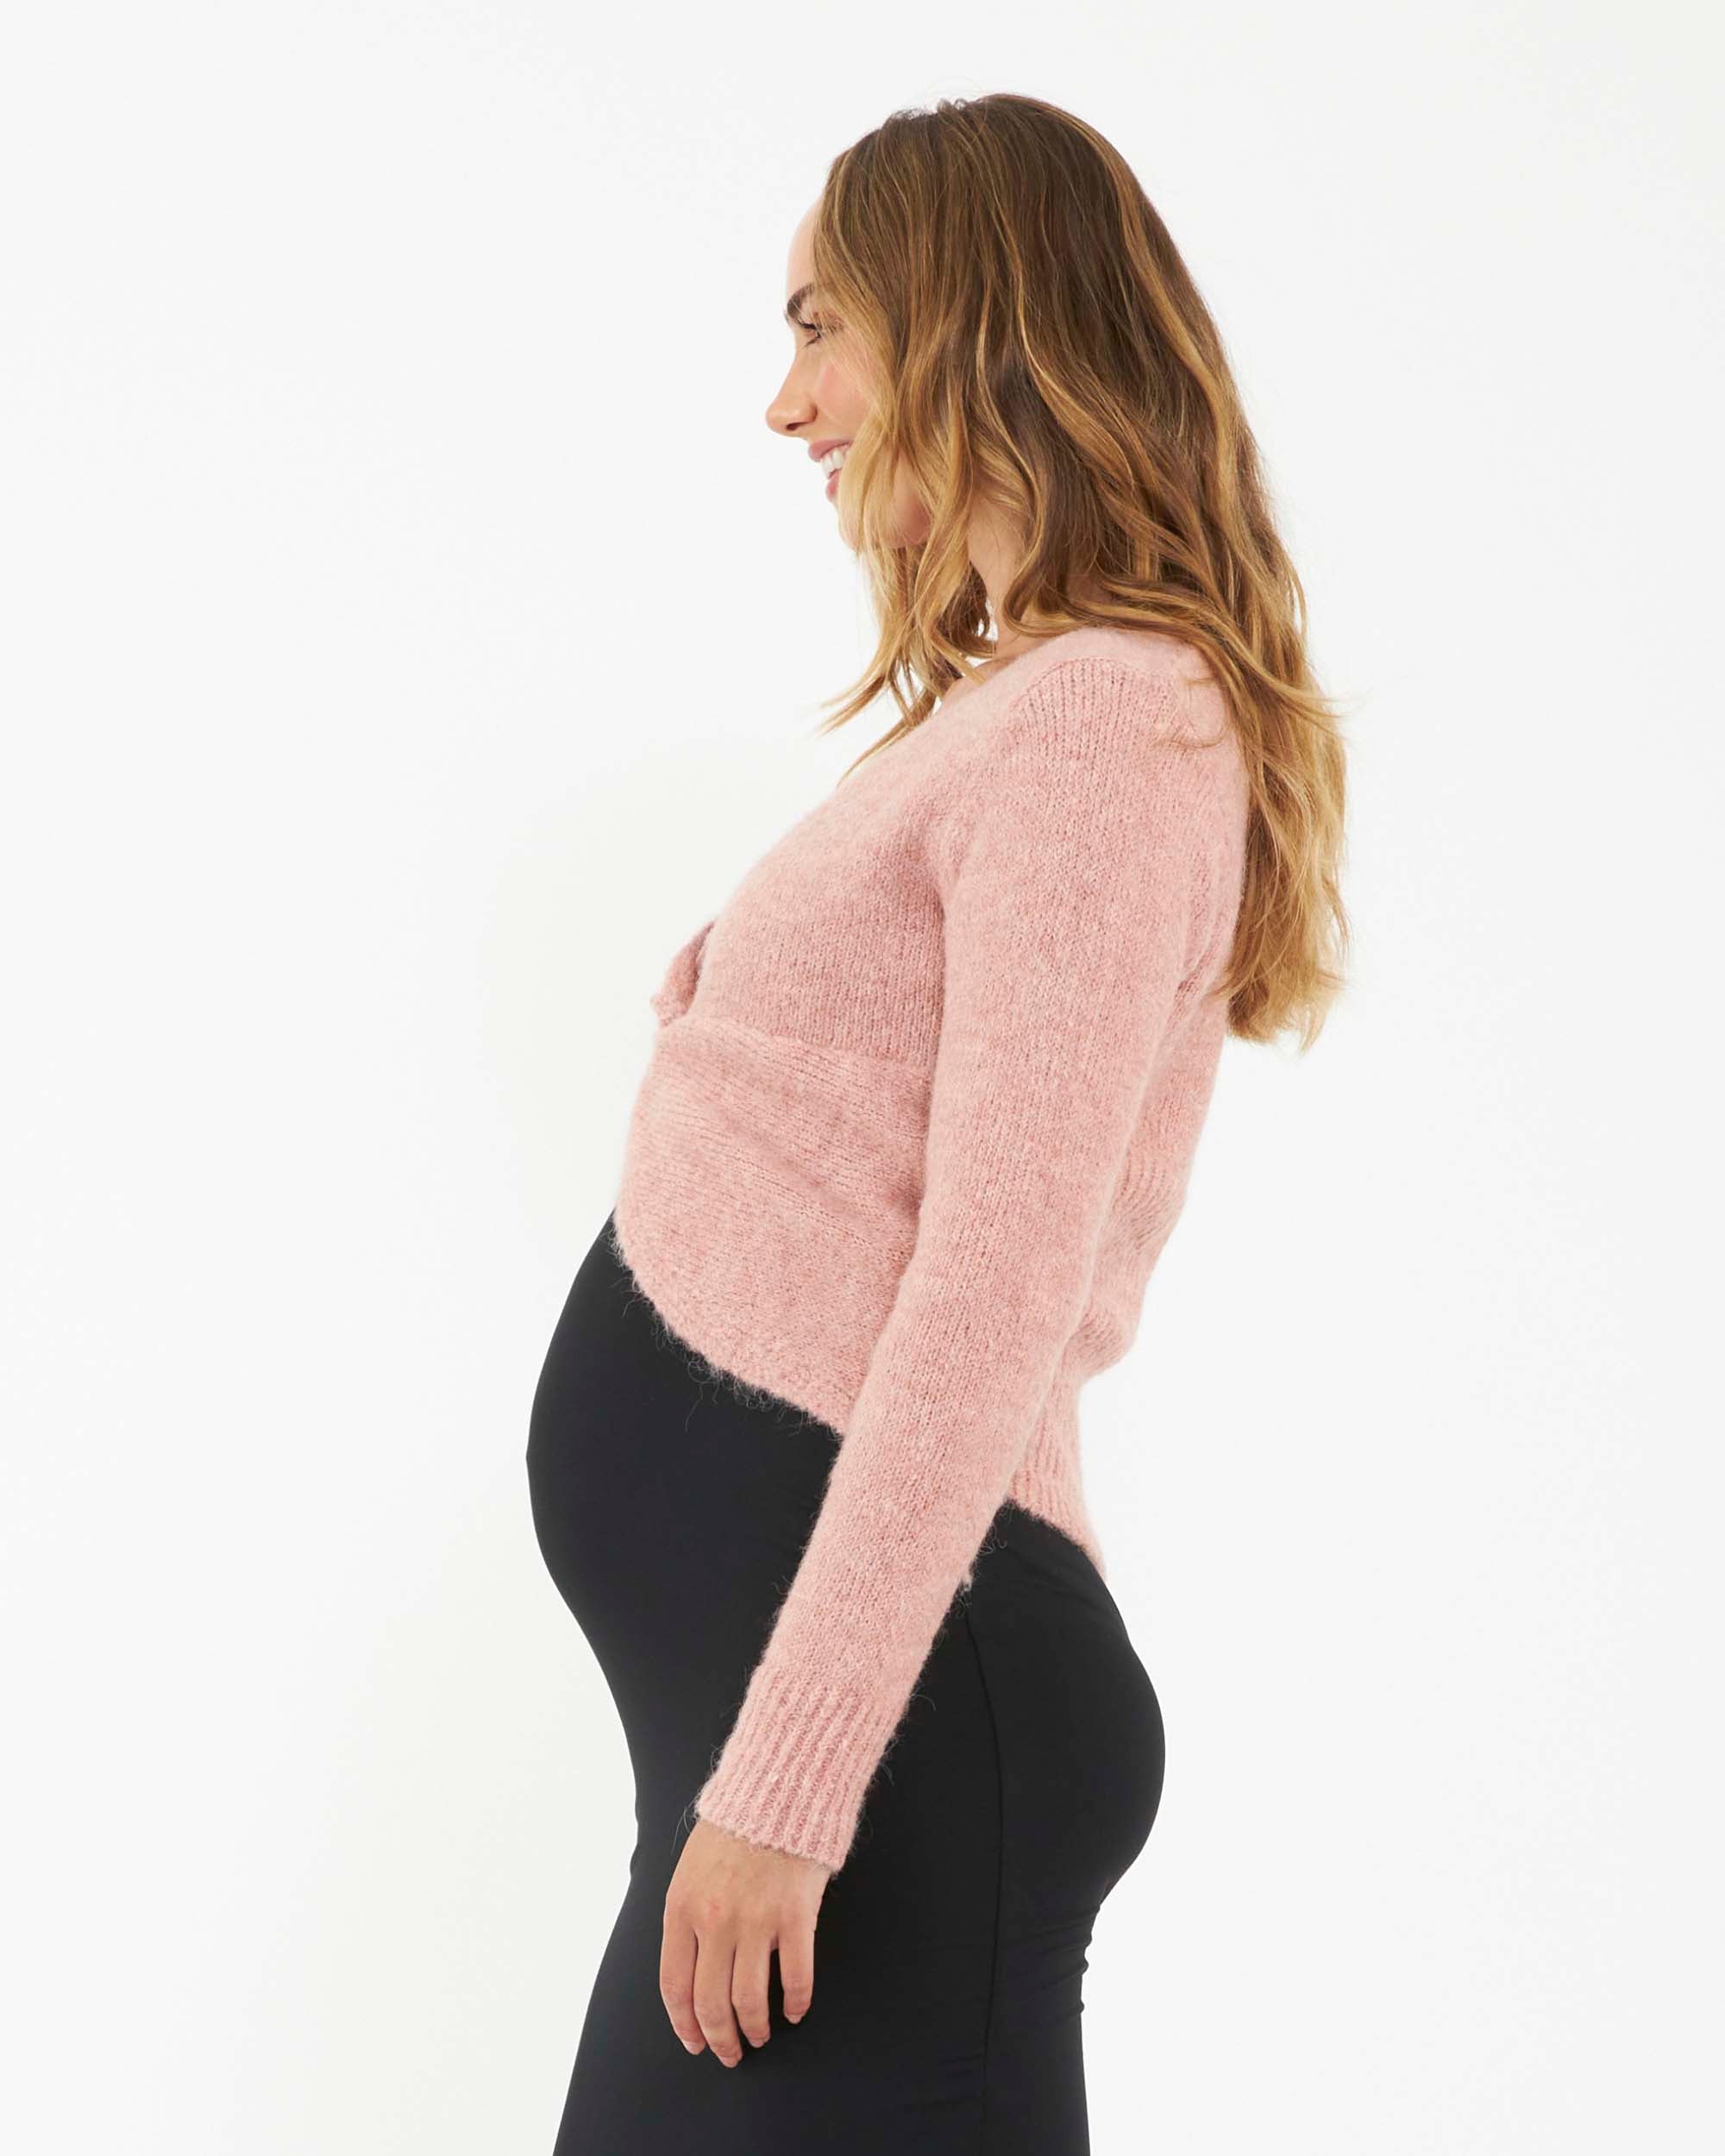 Ripe Maternity 'Nala' Knot Front Knit - Dusty Pink